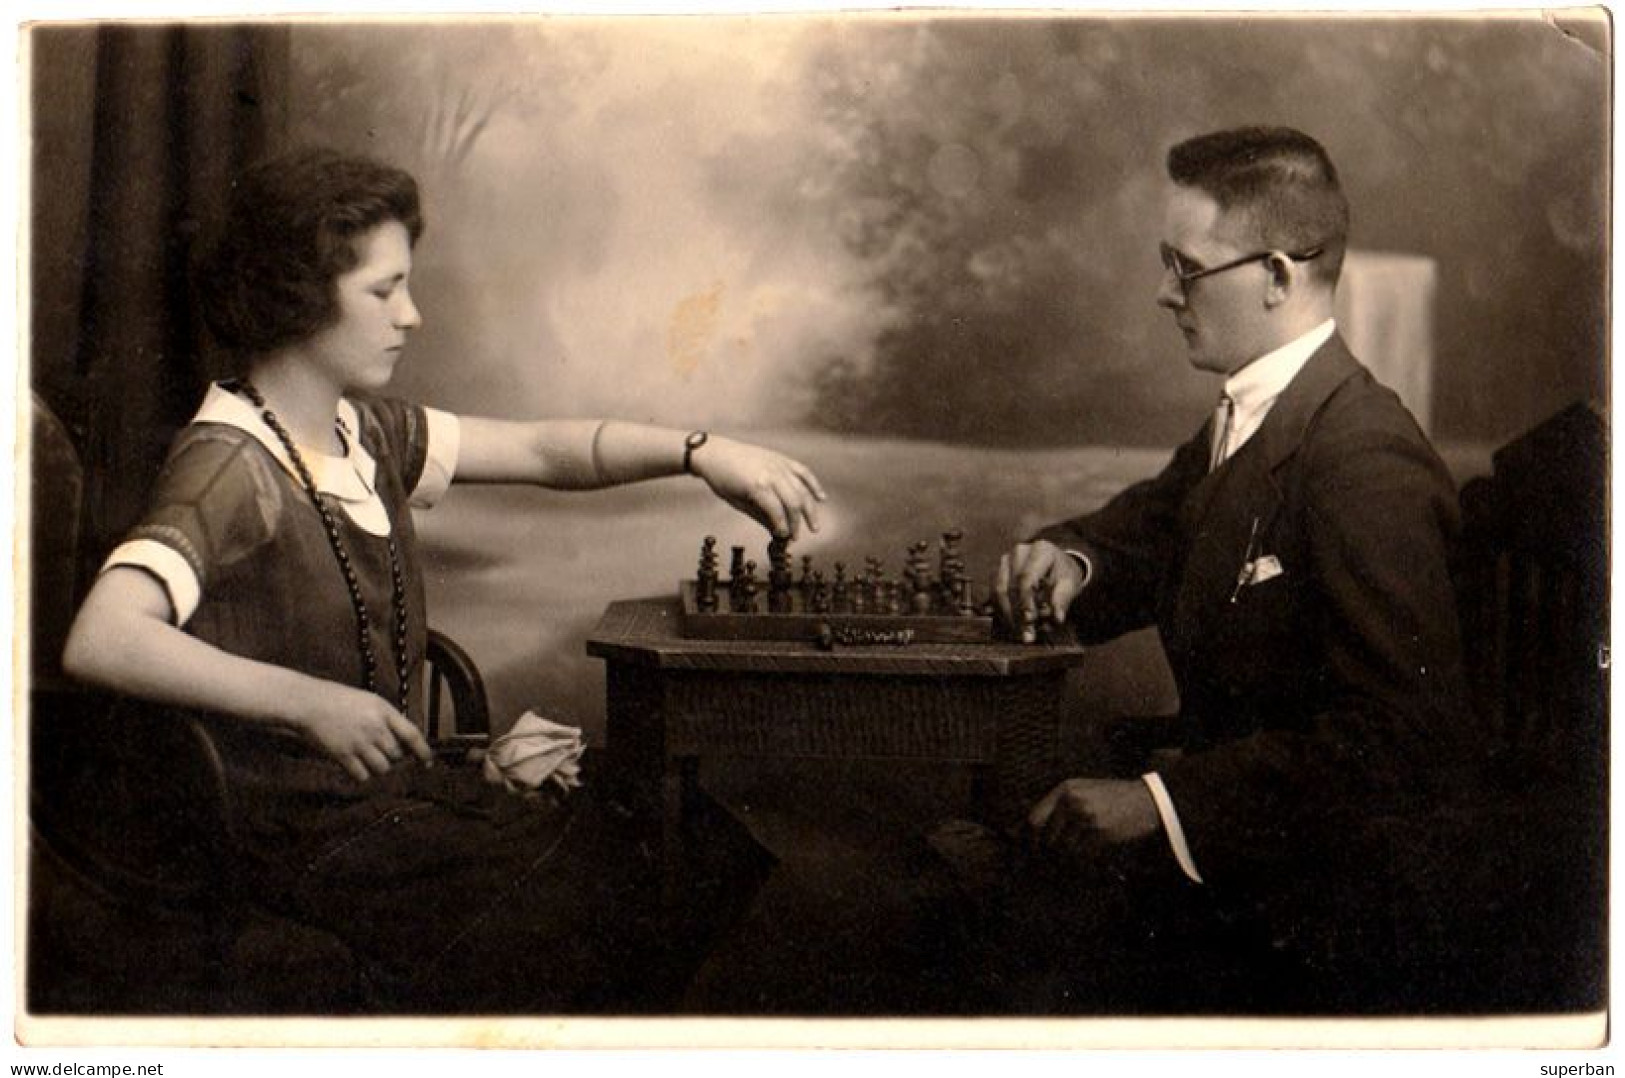 ECHECS / CHESS : ROUMANIE / ROMANIA : CHESS GAME / PARTIE D'ECHECS - CARTE VRAIE PHOTO / REAL PHOTO ~ 1935 - '40 (an322) - Schach